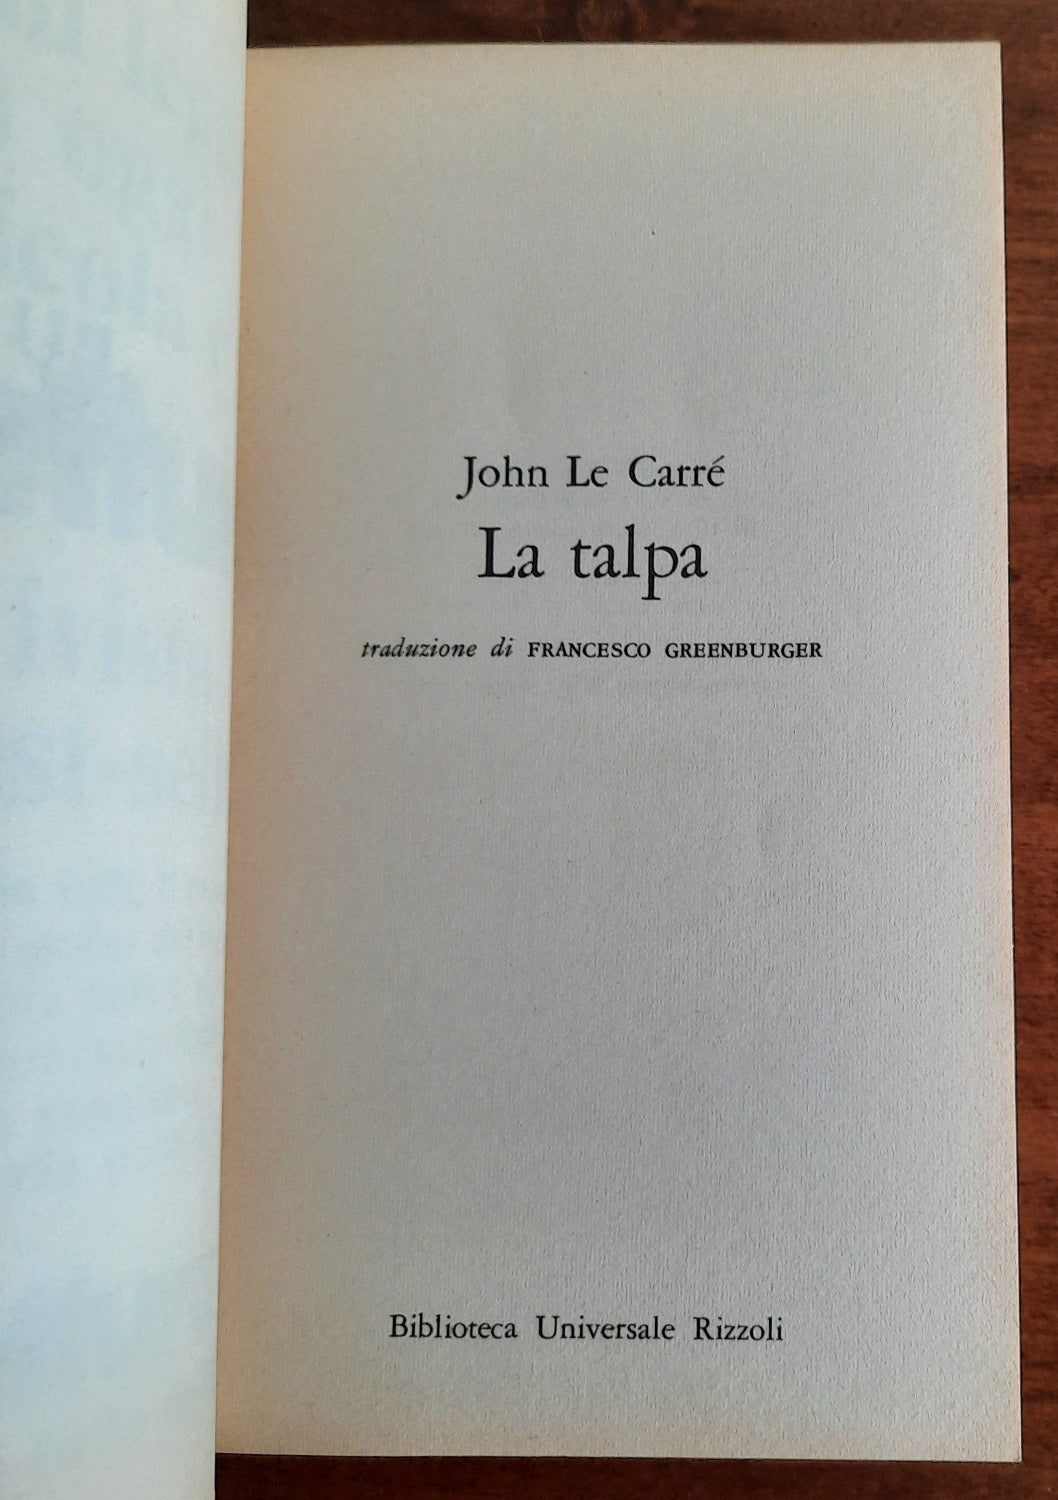 La talpa - John Le Carré - Rizzoli 1977